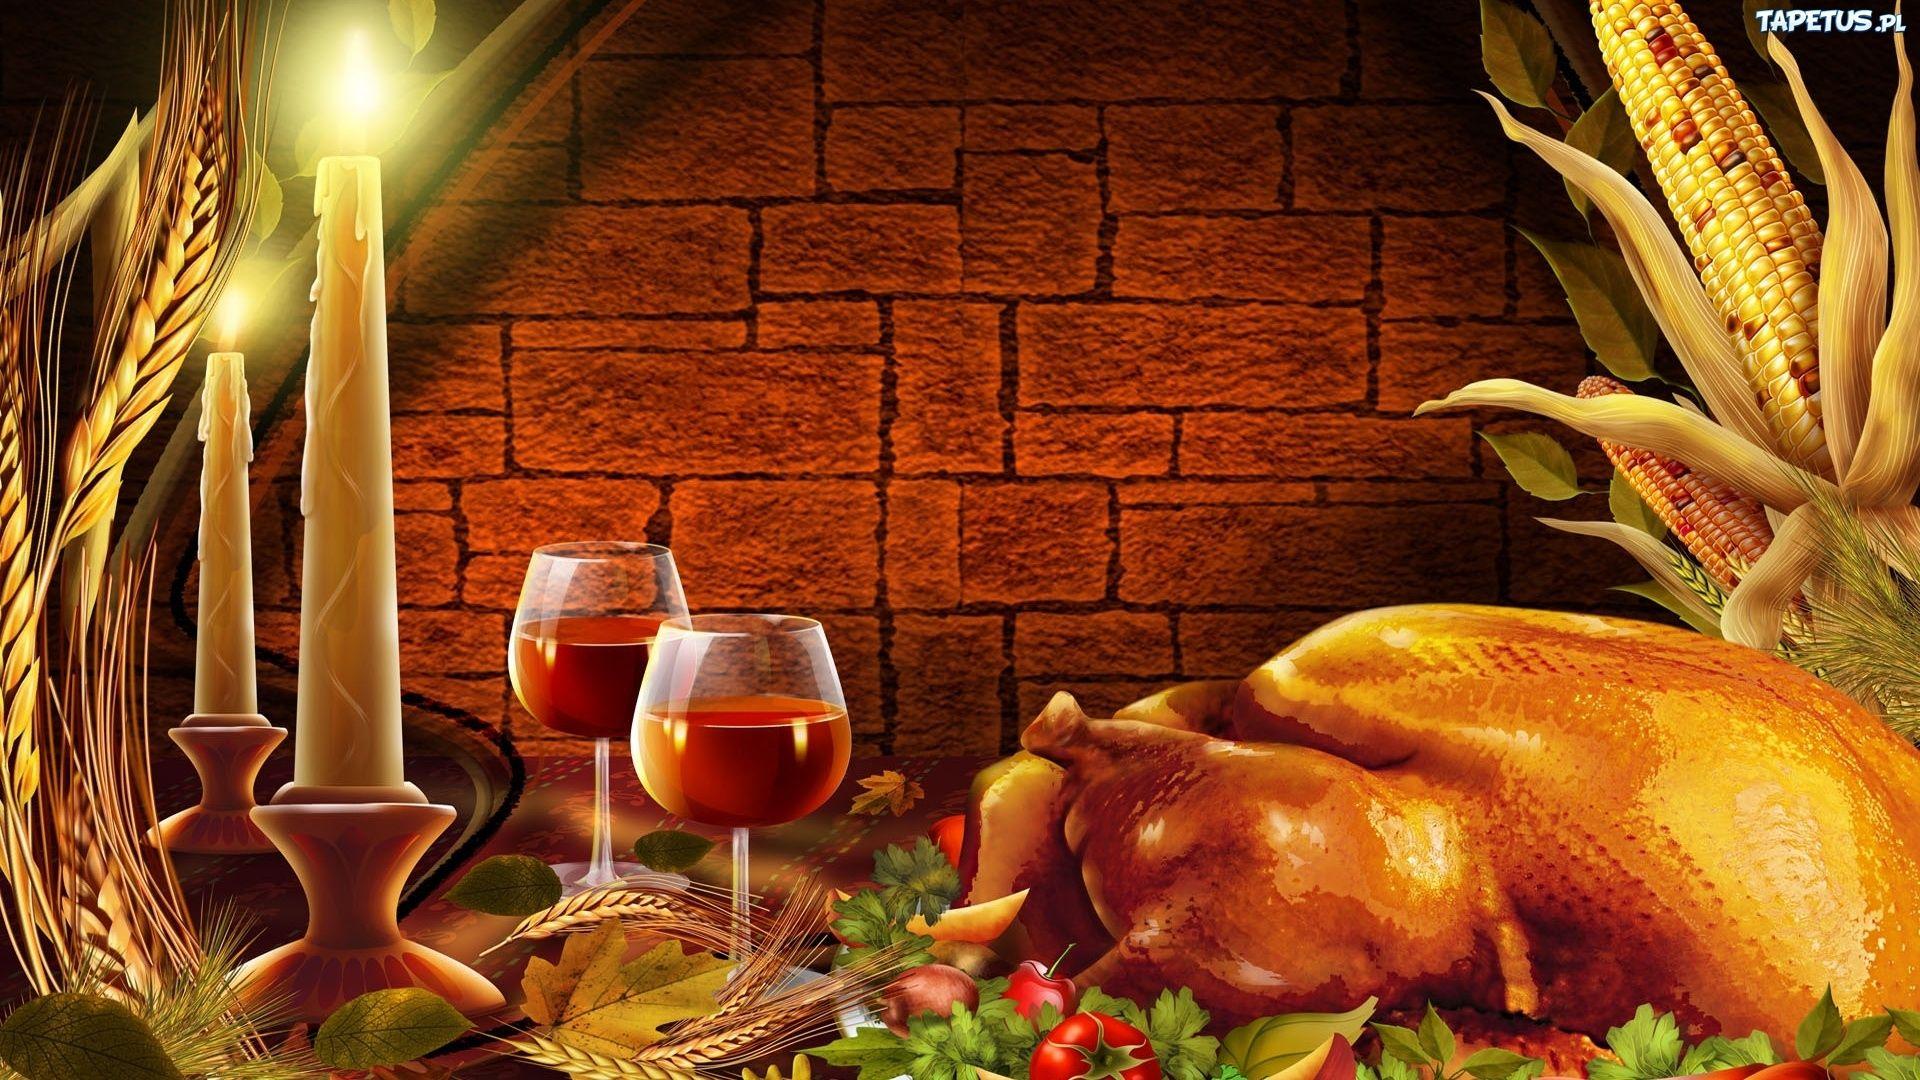 Thanksgiving dinner wallpaper hd